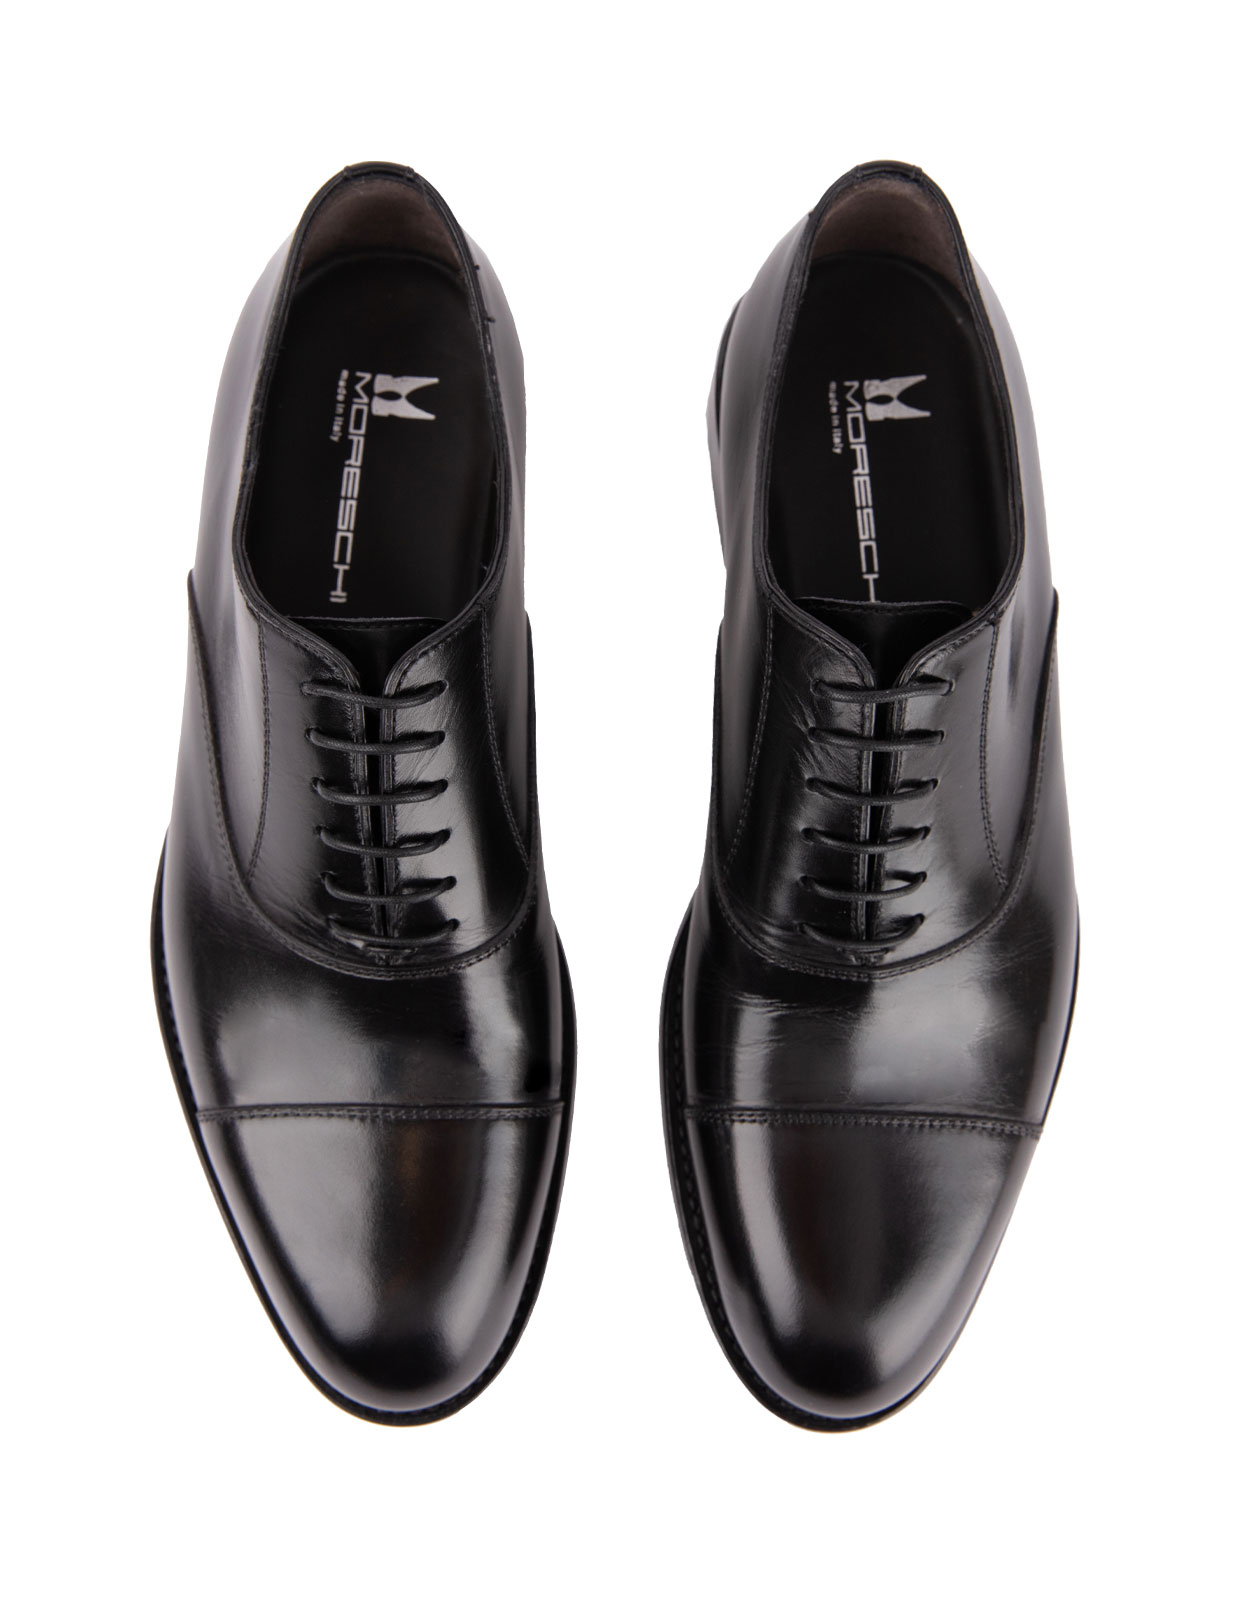 New York Oxford Shoes Calfskin Black Stl 7.5